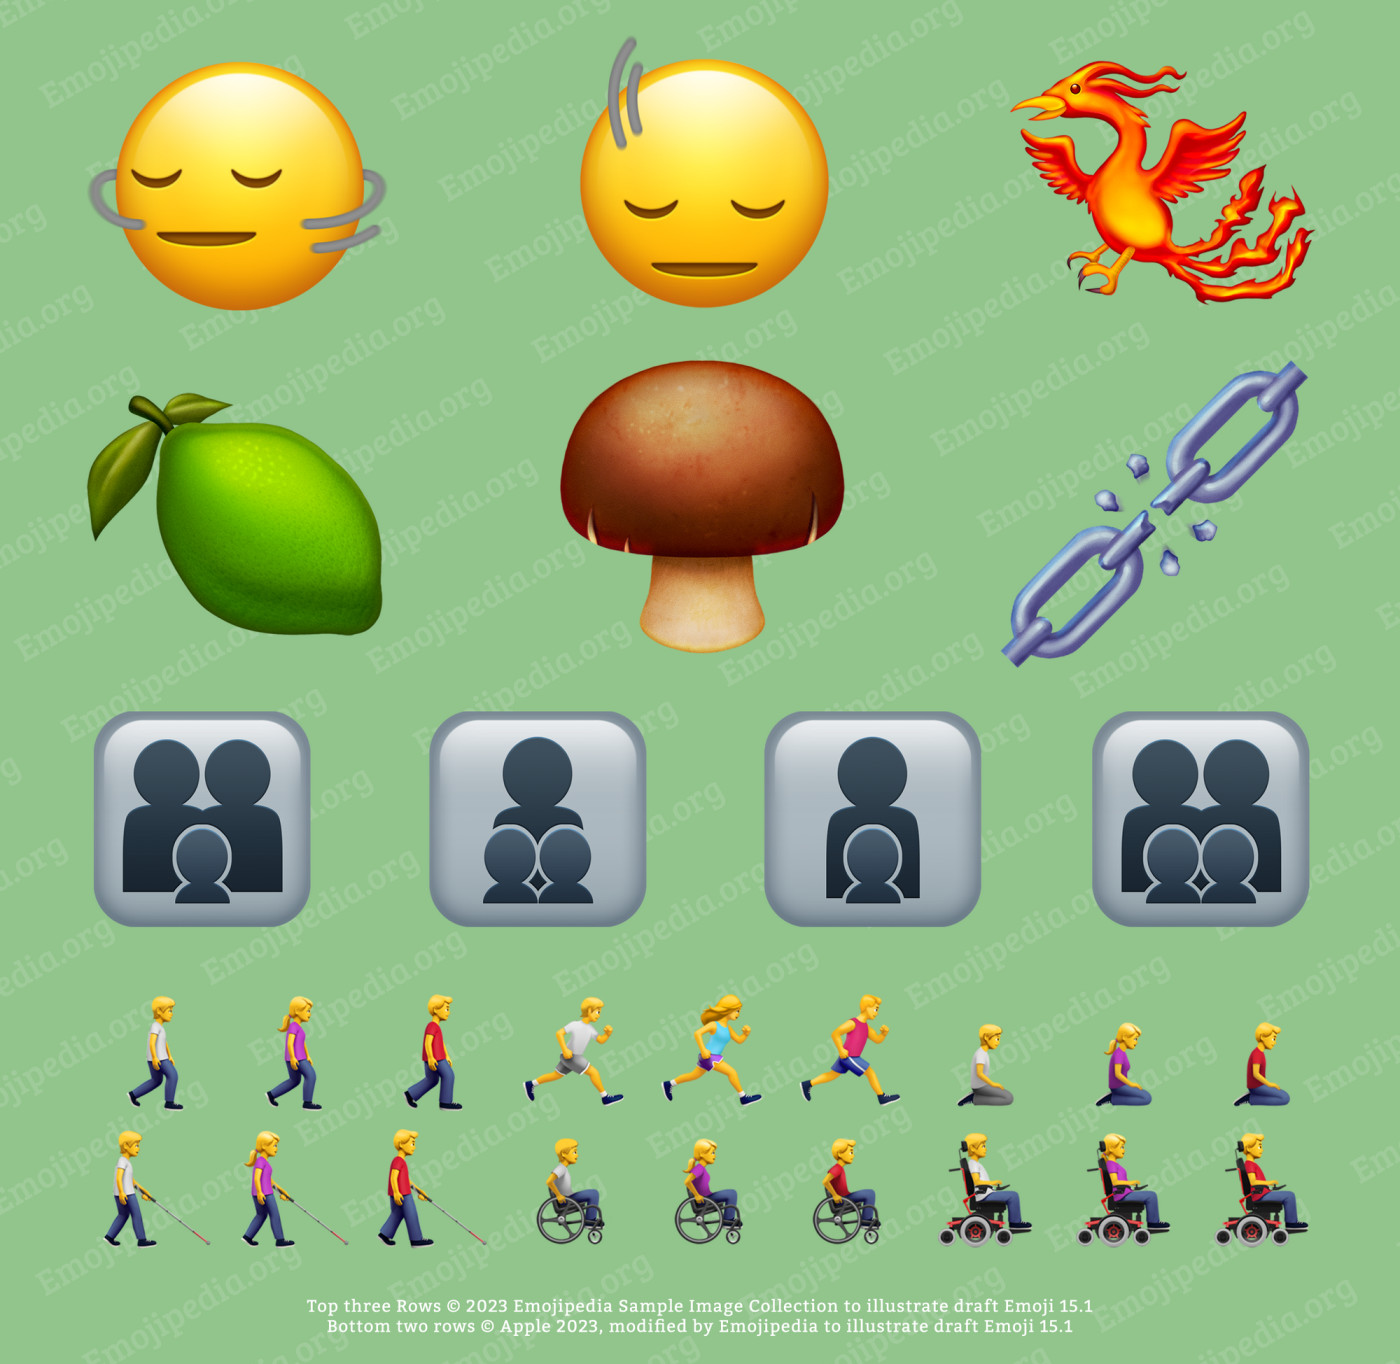 The future emojis of iOS 17 are revealed